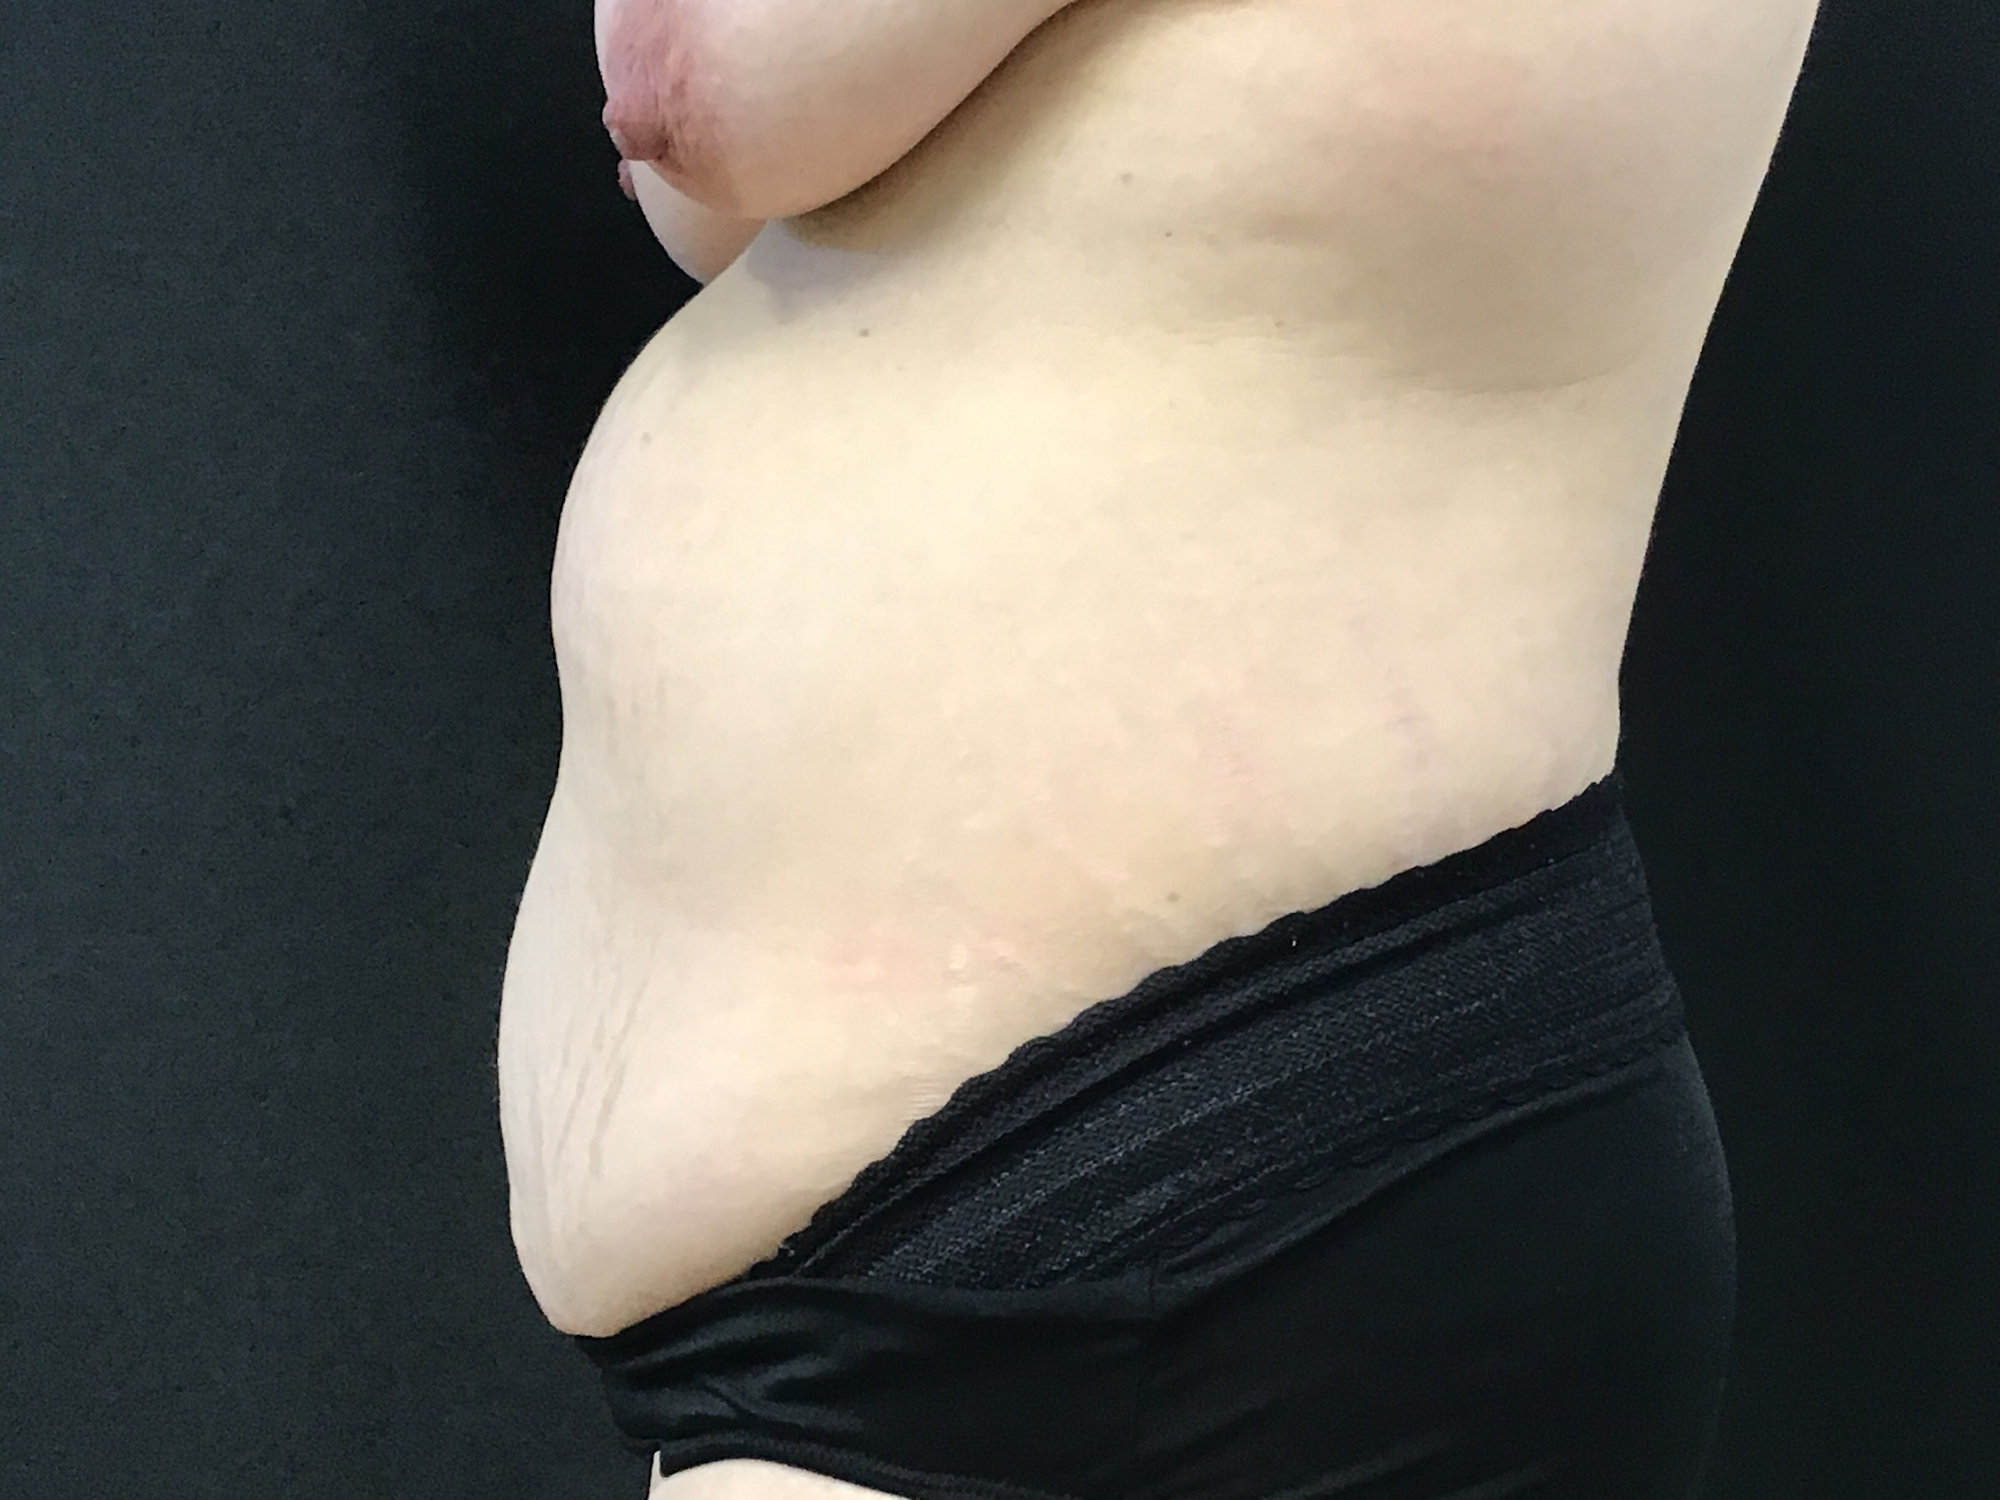 Breast Lift and Tummy Tuck